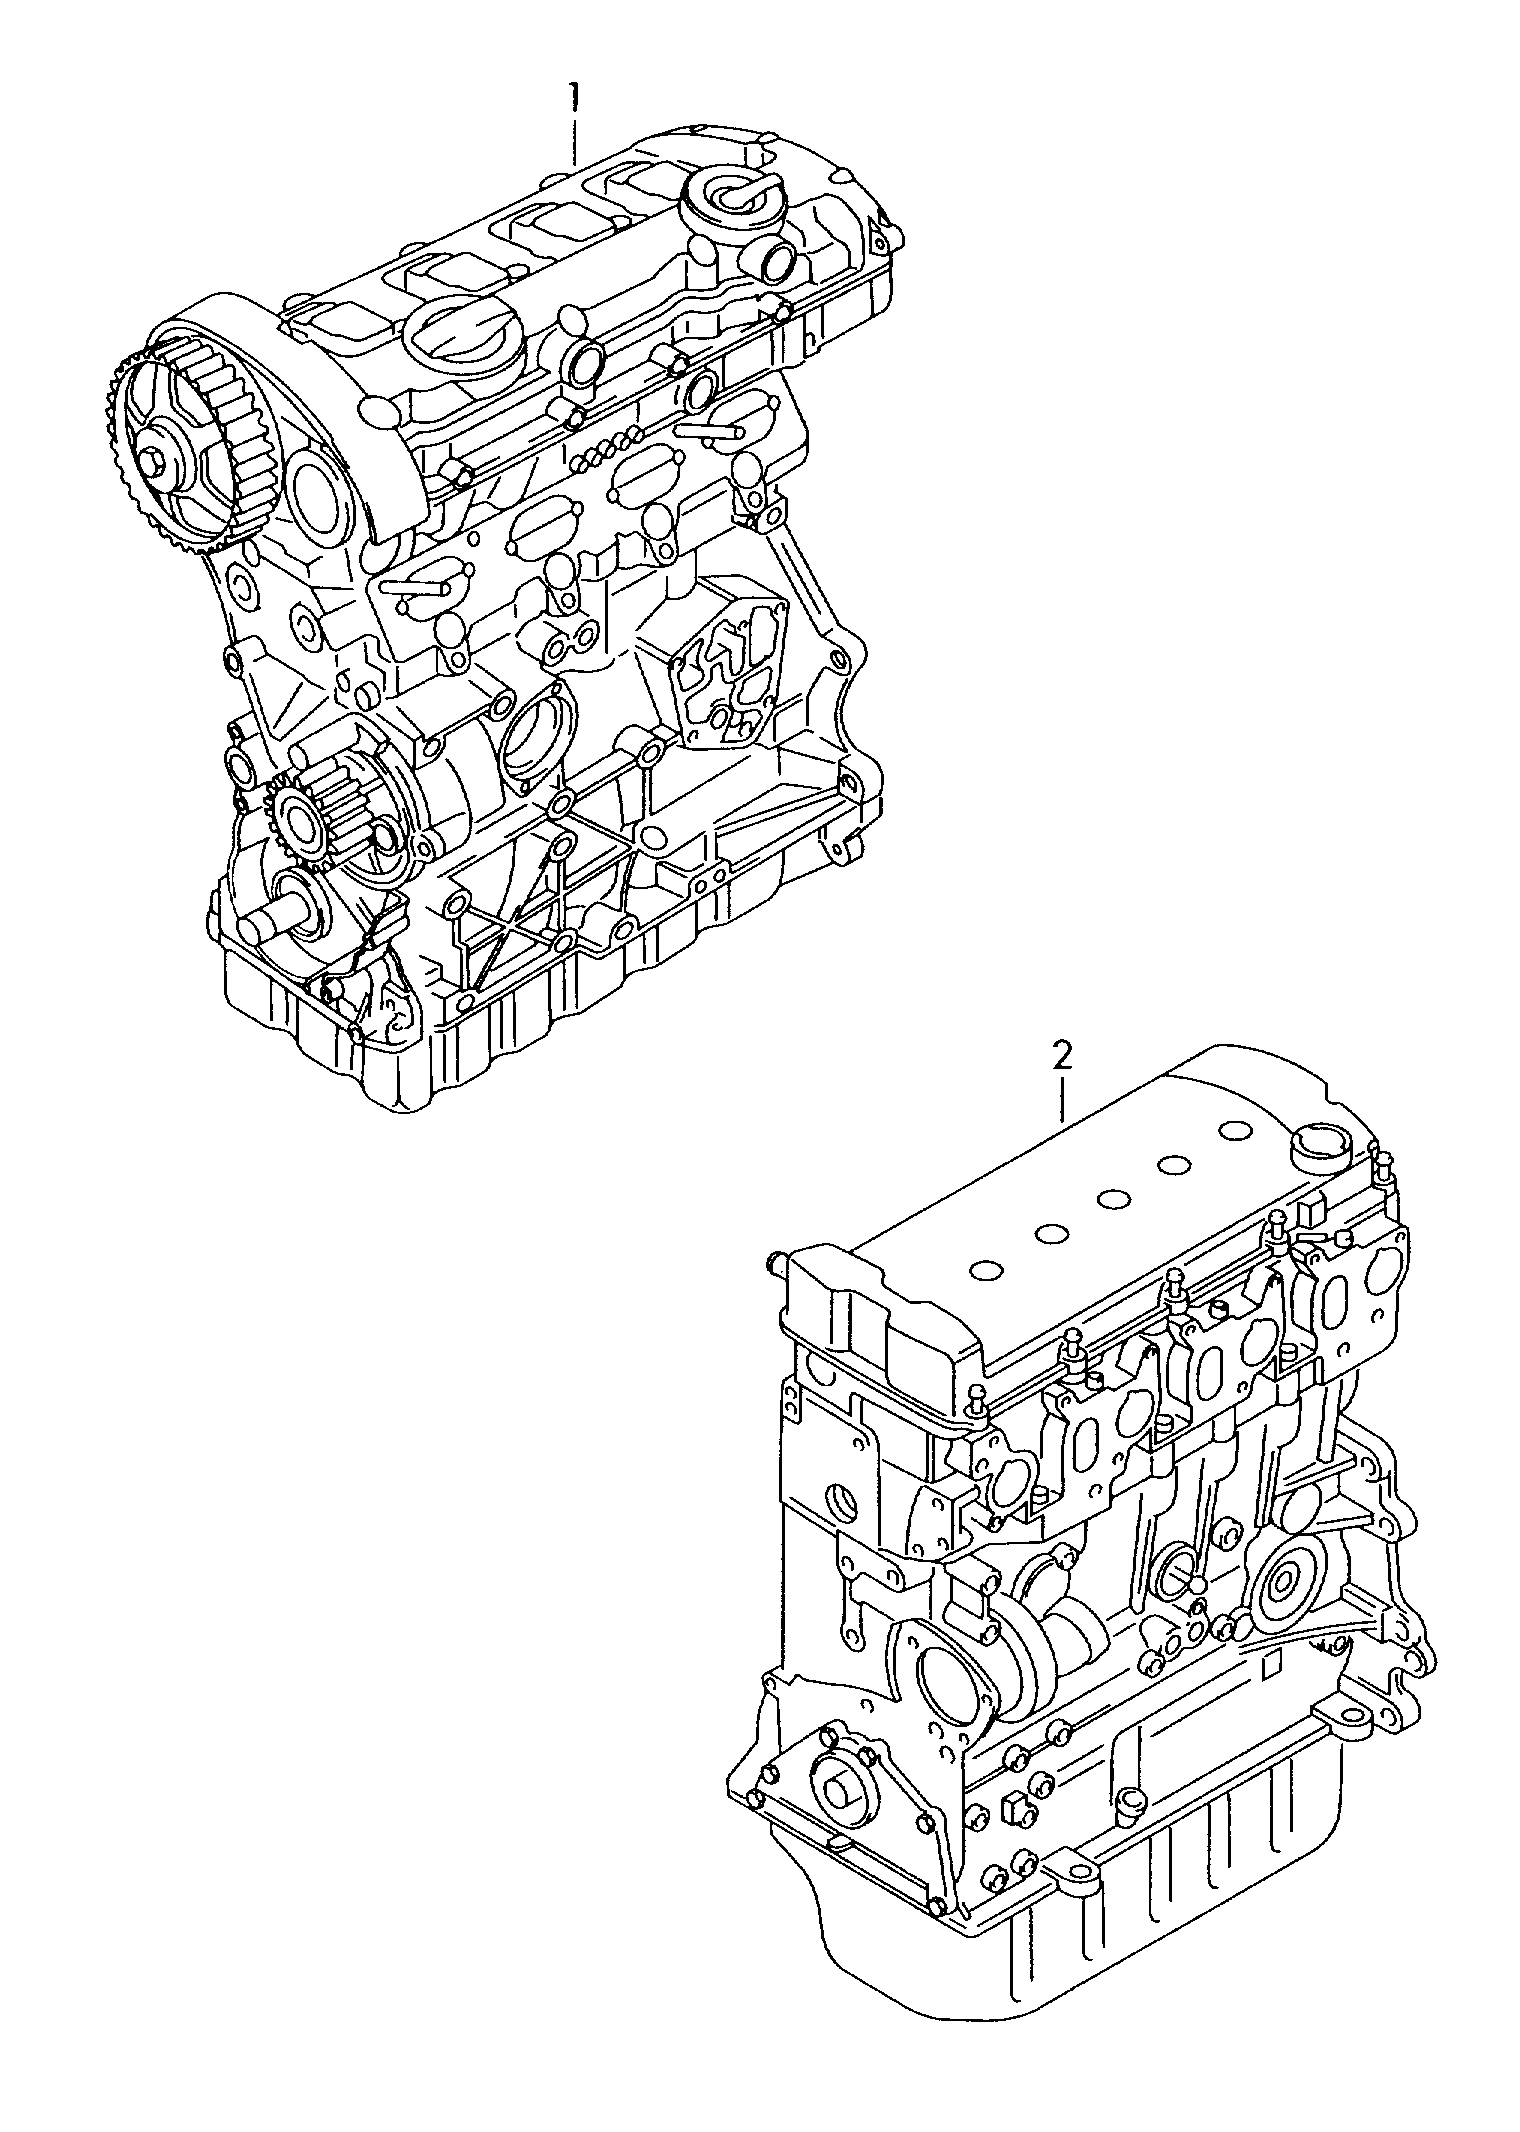 Teilmotor mit Kurbelwelle,<br>Kolben, Ölpumpe und Ölwanne  - Sharan/syncro/4Motion - sha